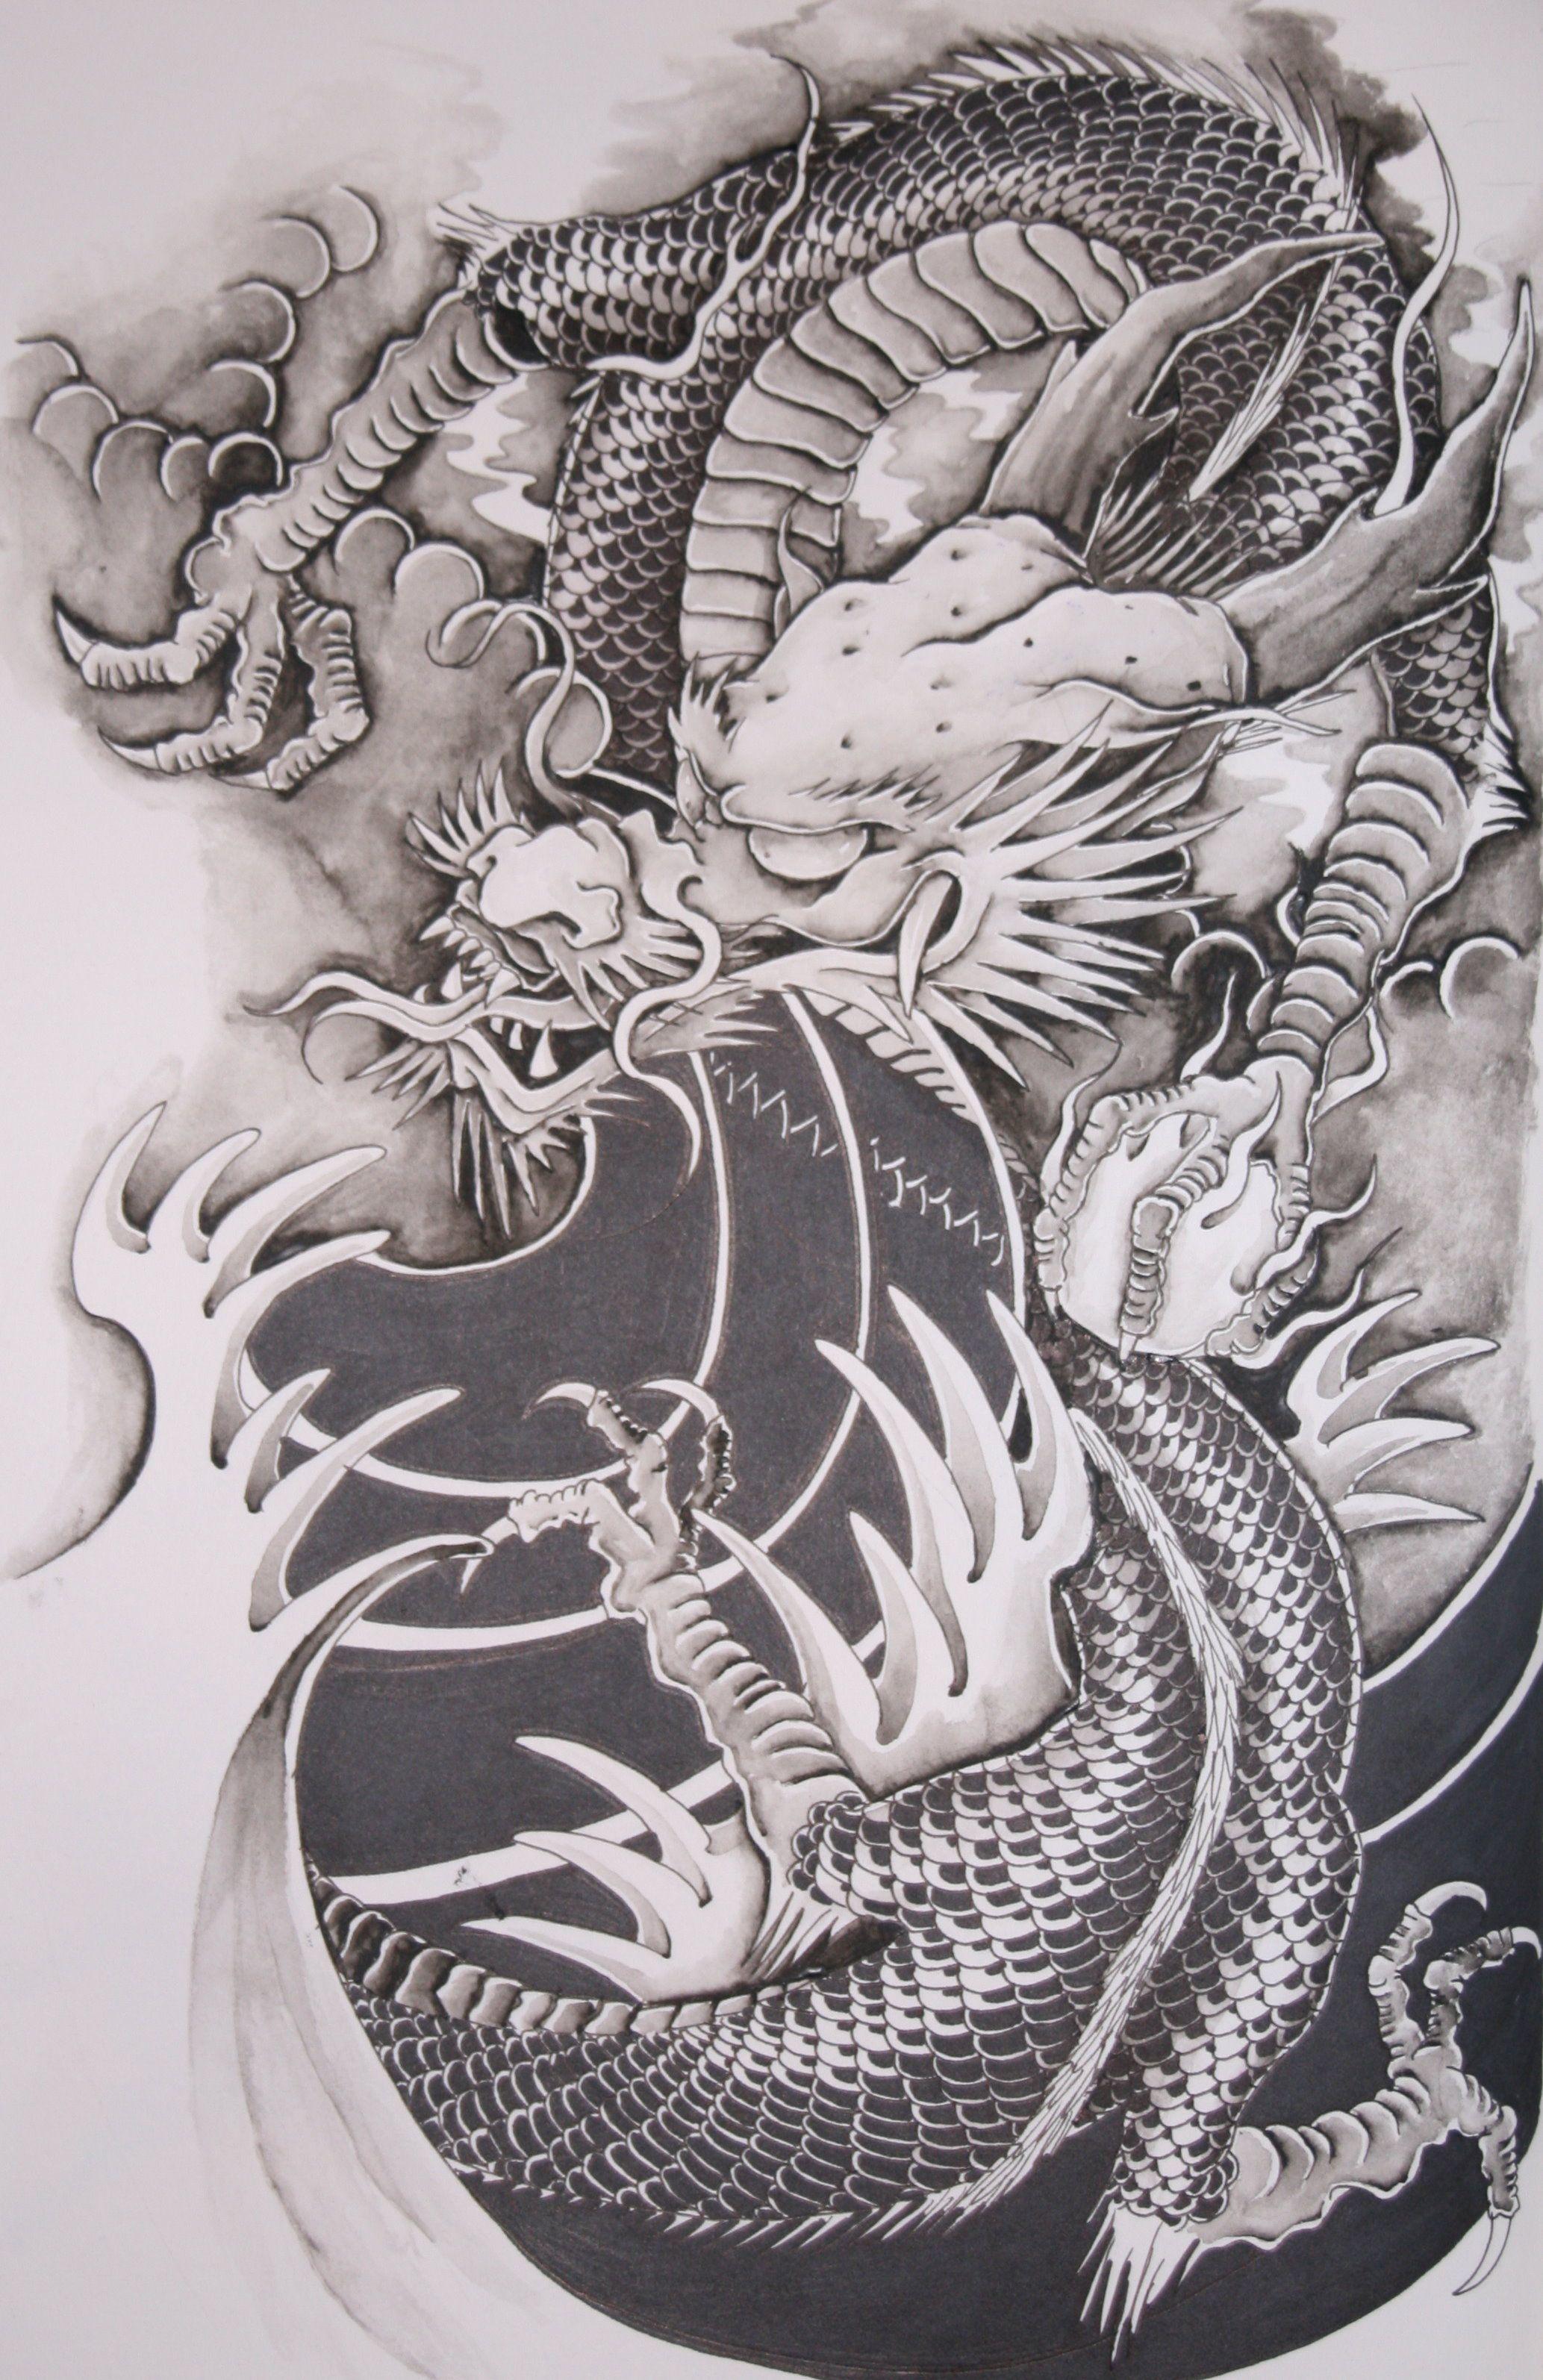 Chinese Dragon Art. Chinese Dragon Tattoo wallpaper 82665. Asian